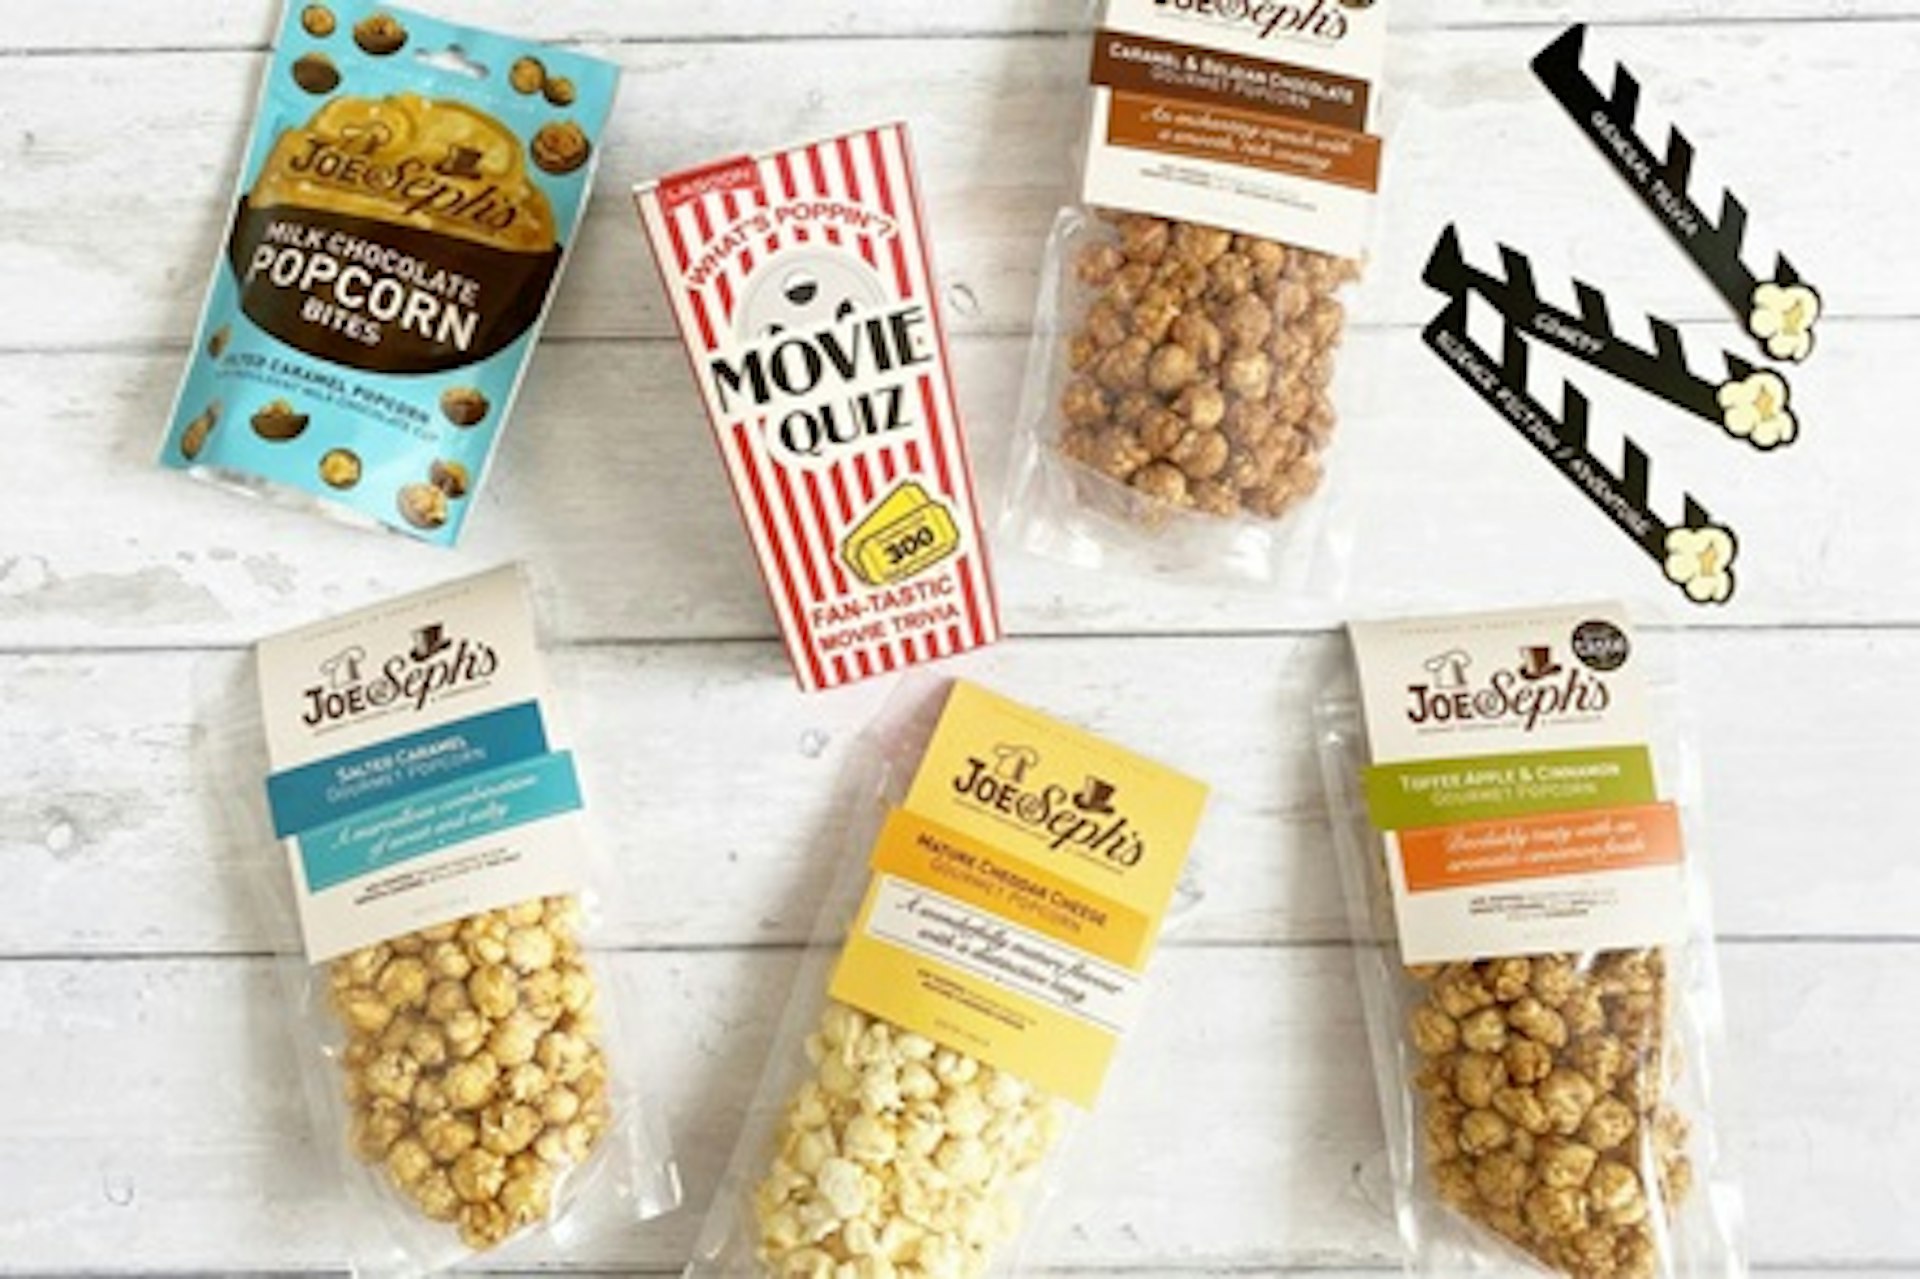 Movie Quiz Gift Box with Joe & Seph’s Popcorn 2